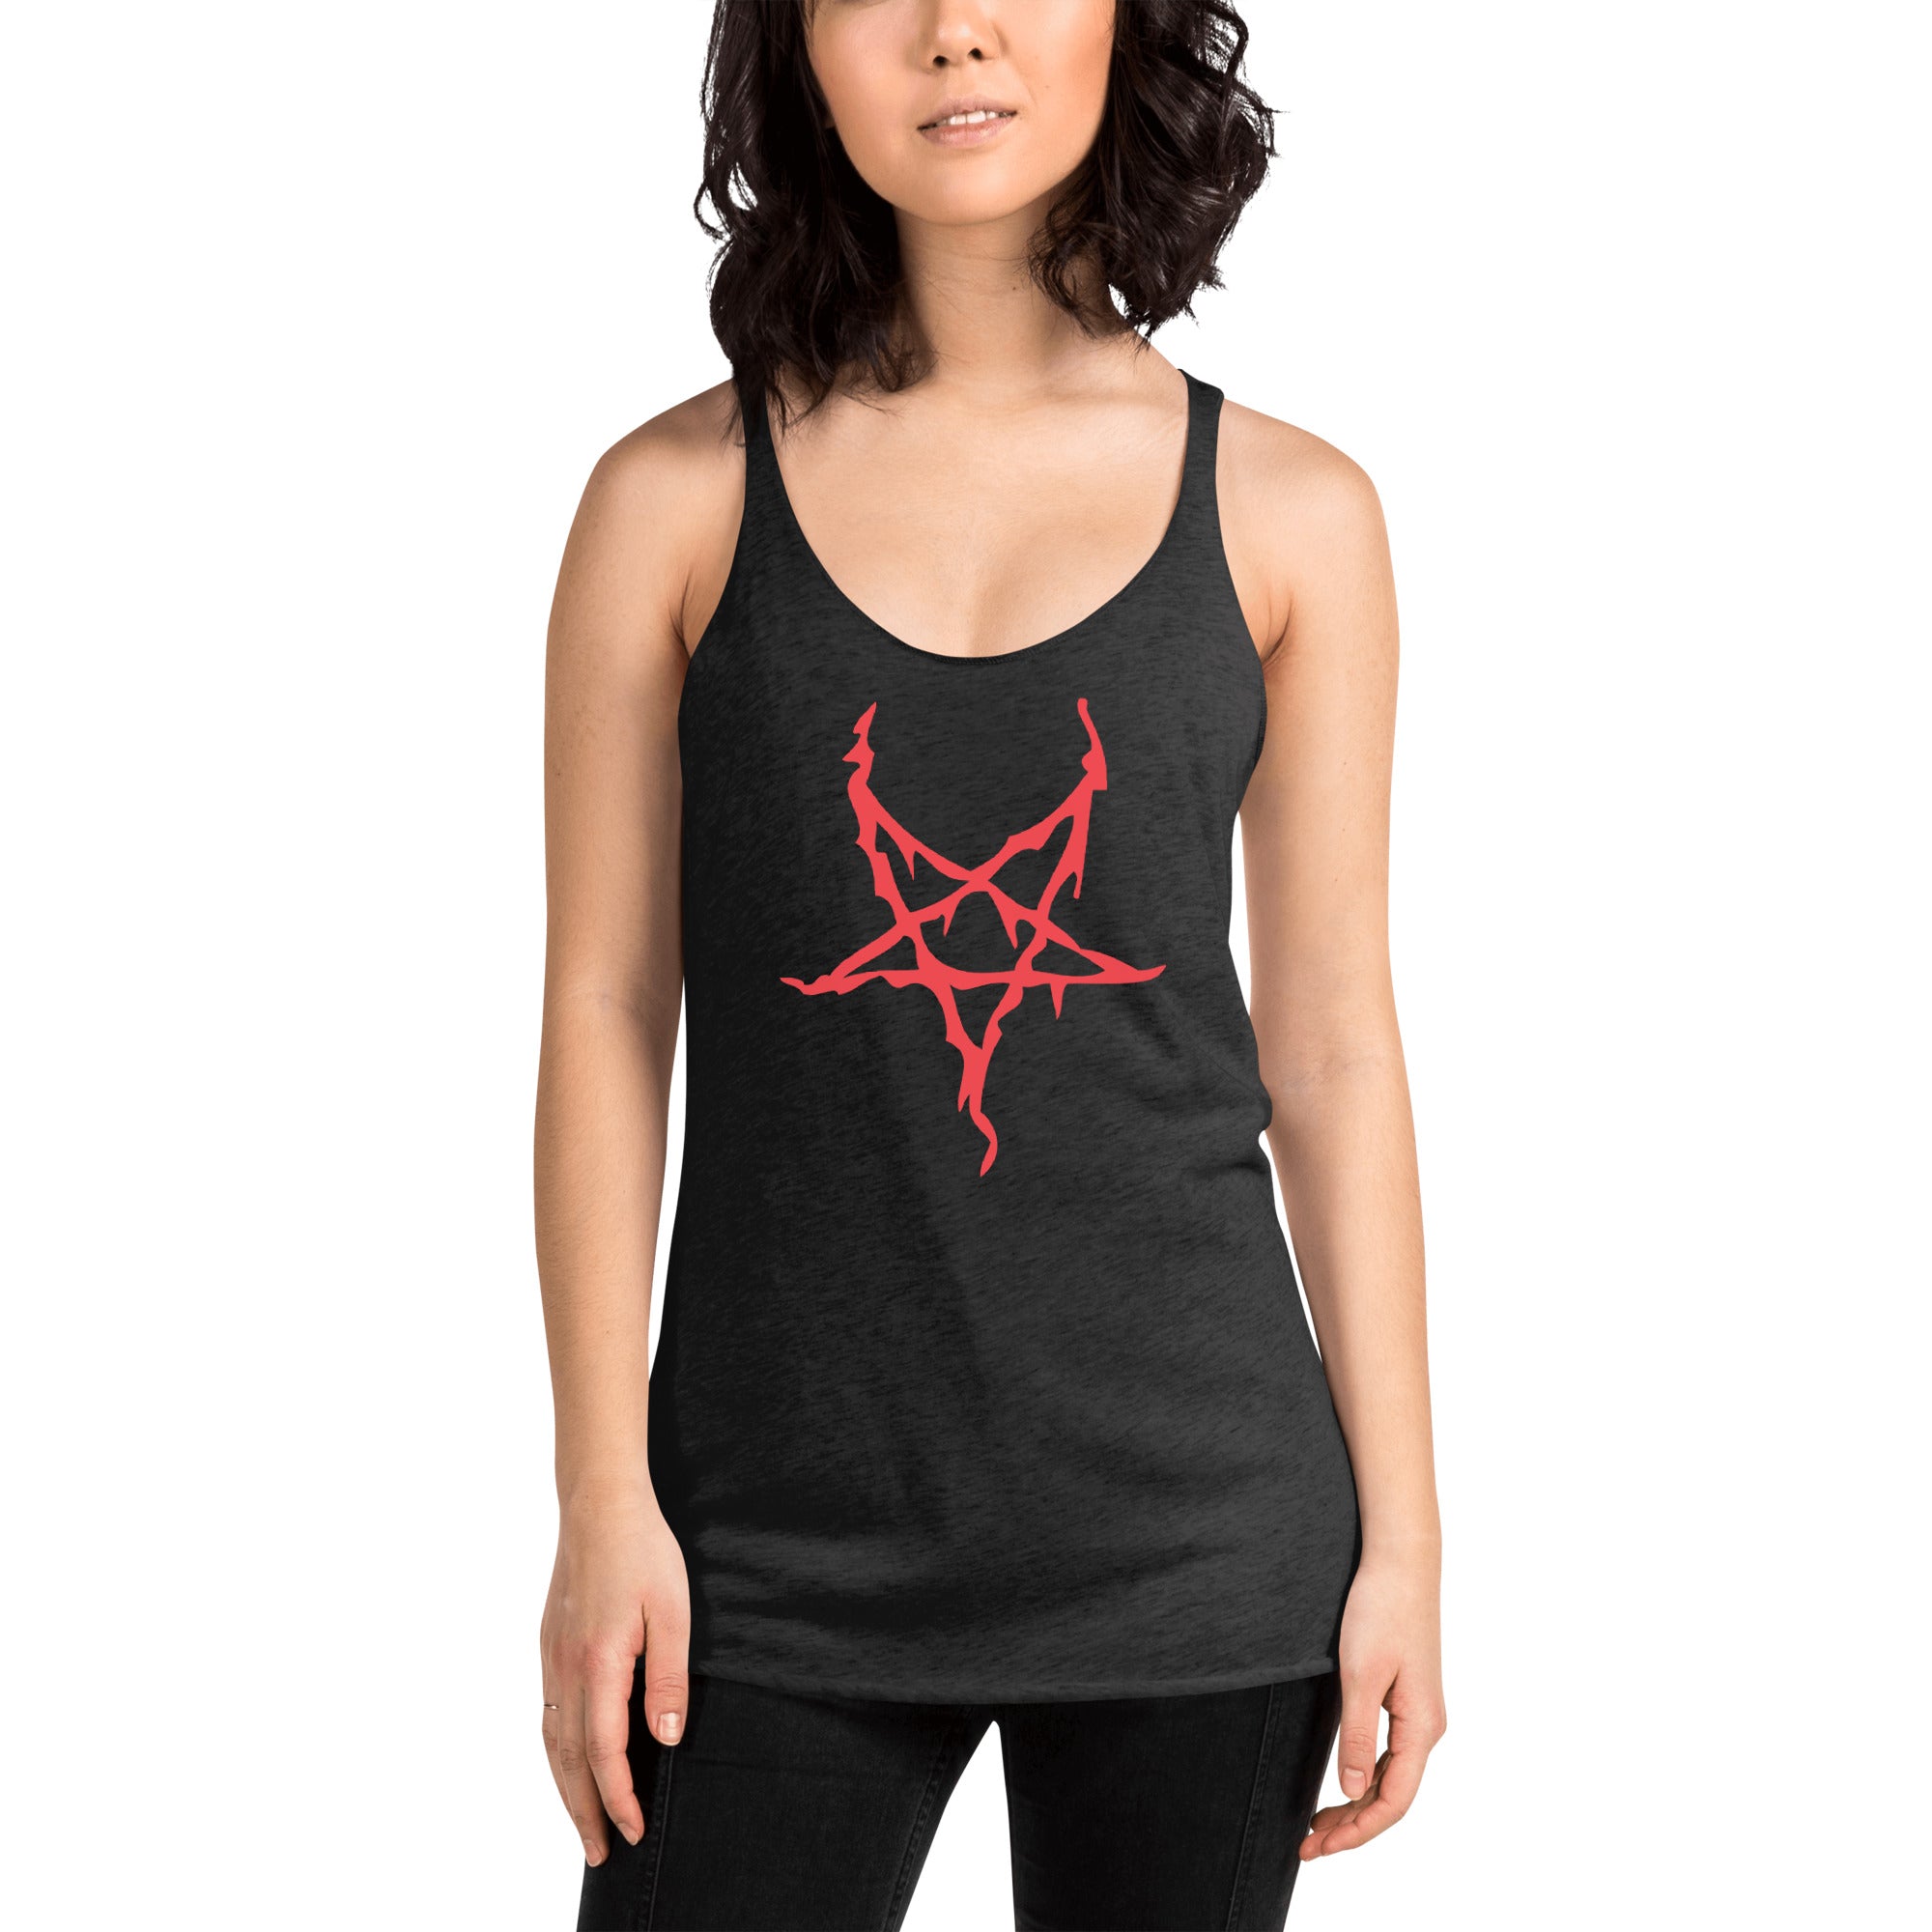 Red Melting Inverted Pentagram Black Metal Style Women's Racerback Tank Top Shirt